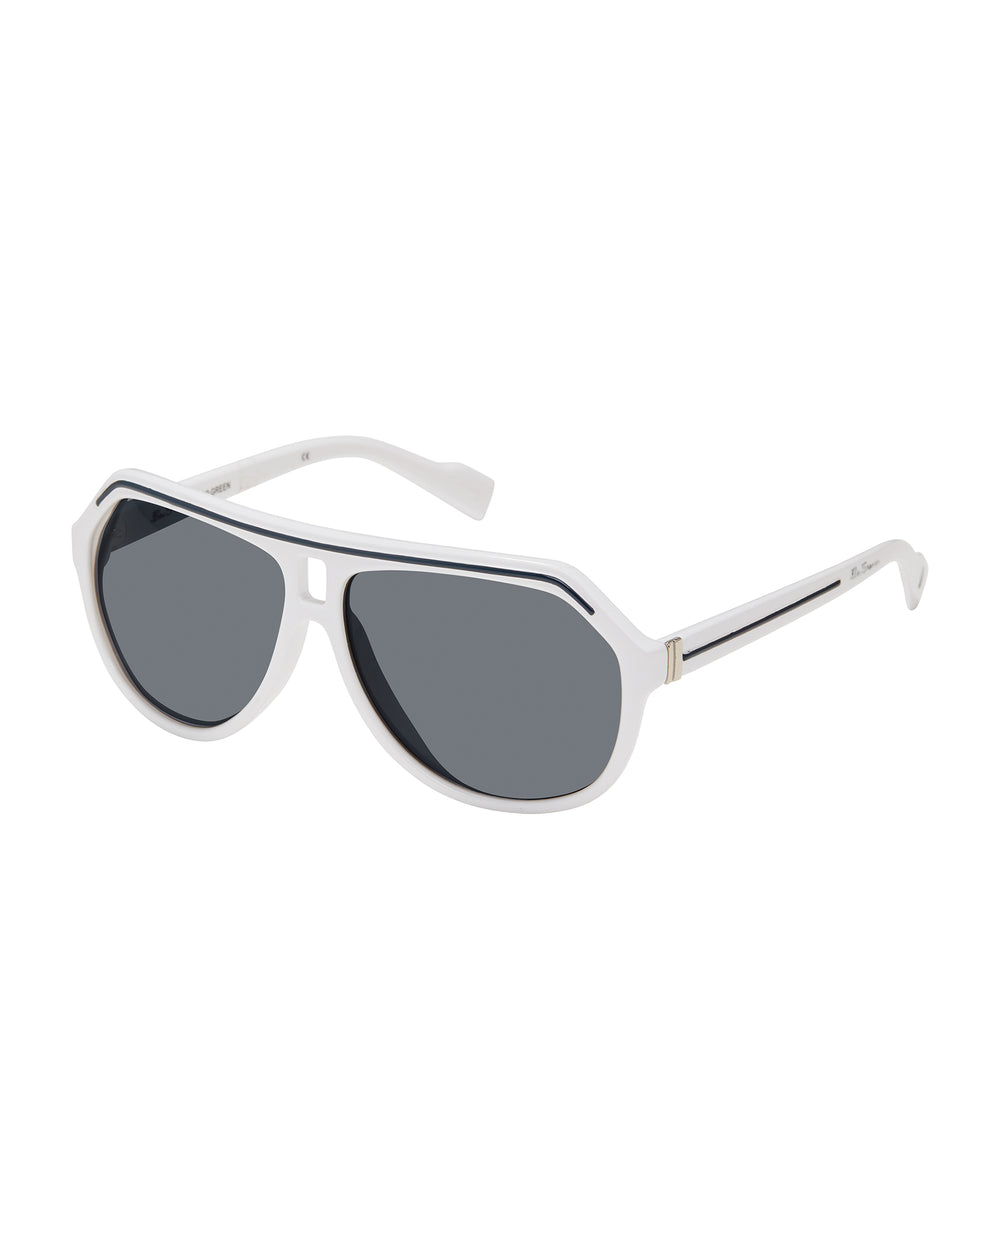 Ben Eco-Green Sunglasses - White/Grey